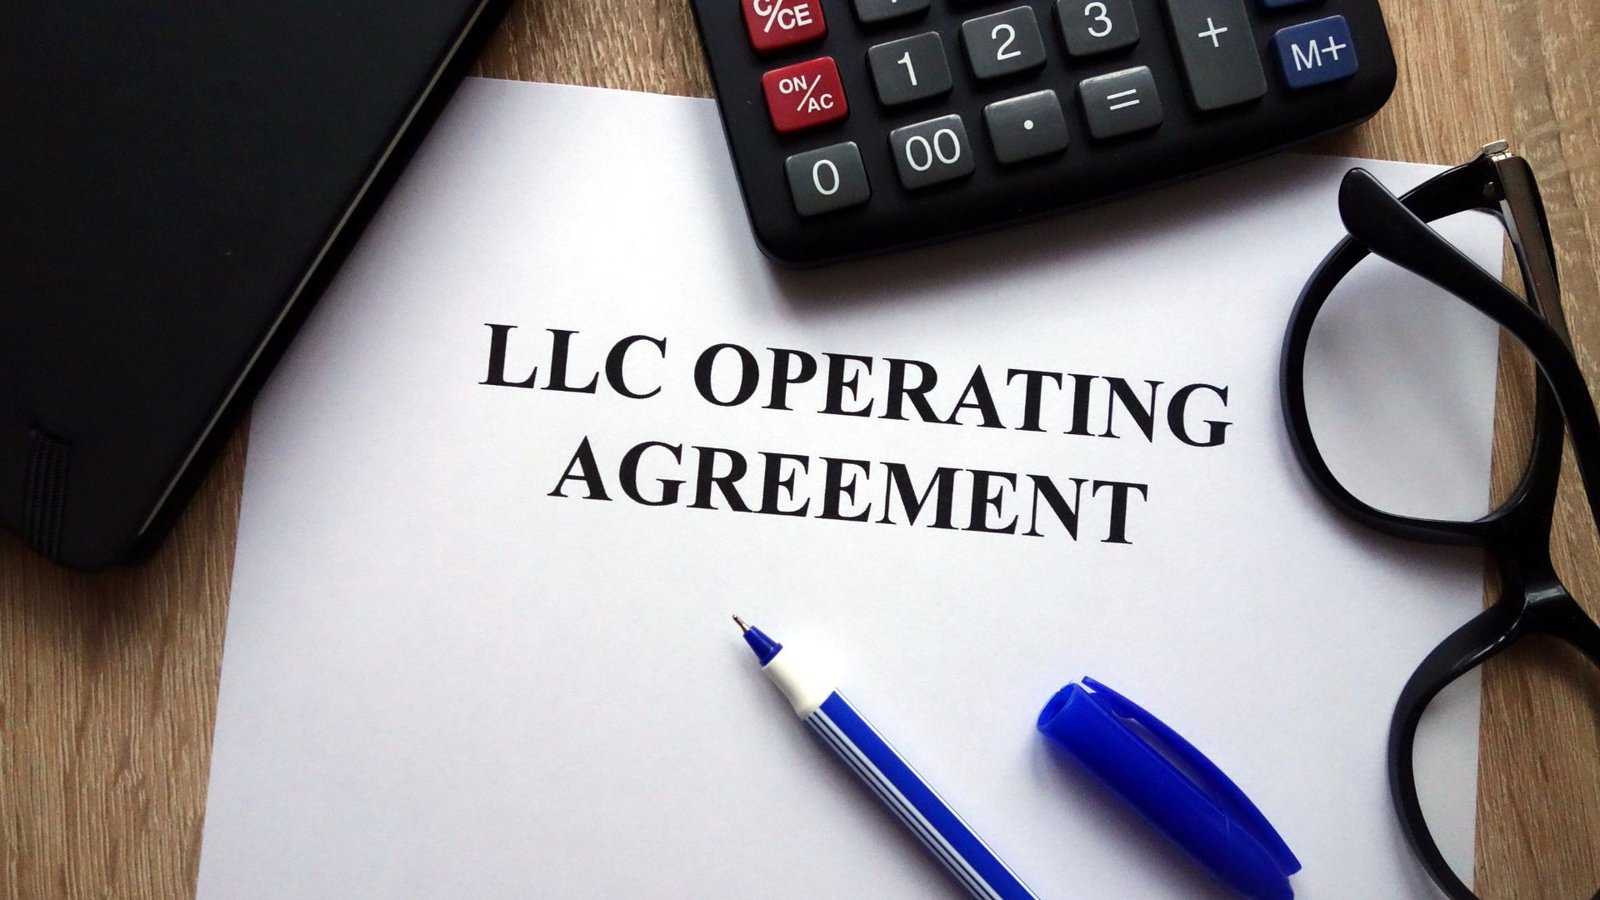 llc operating agreement, Lawforeverything